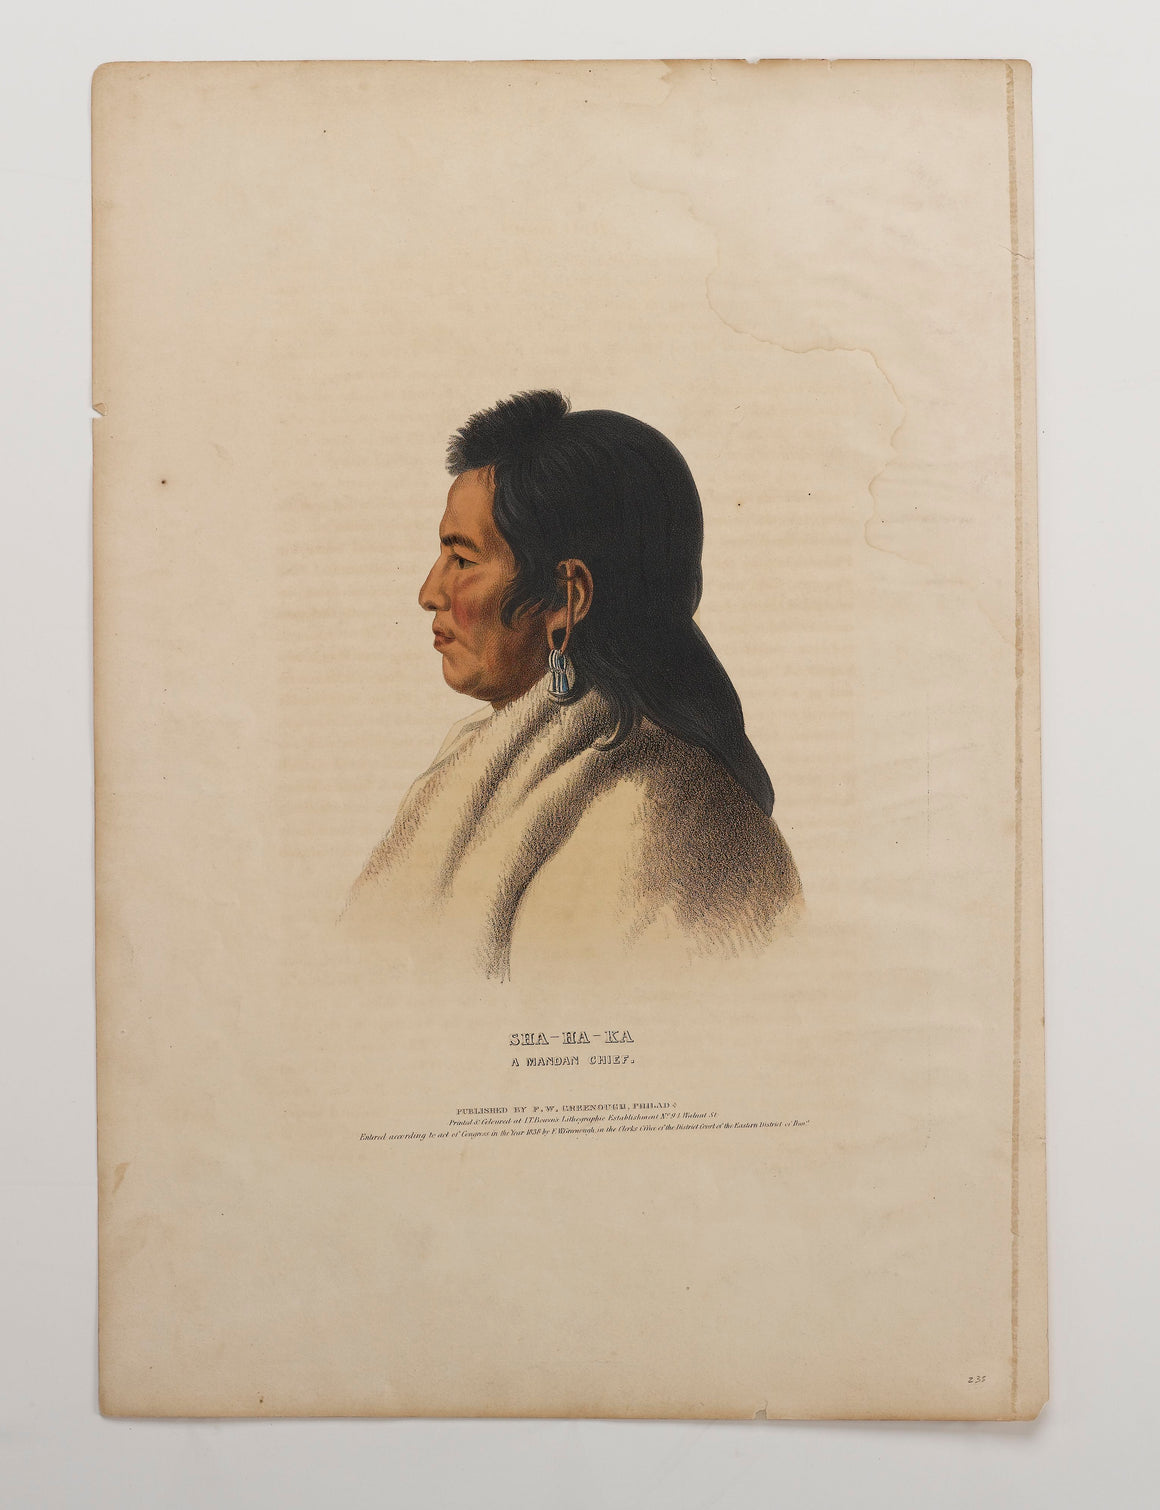 1838 Sha-Ha-Ka: A Mandan Chief Hand-Colored Lithograph